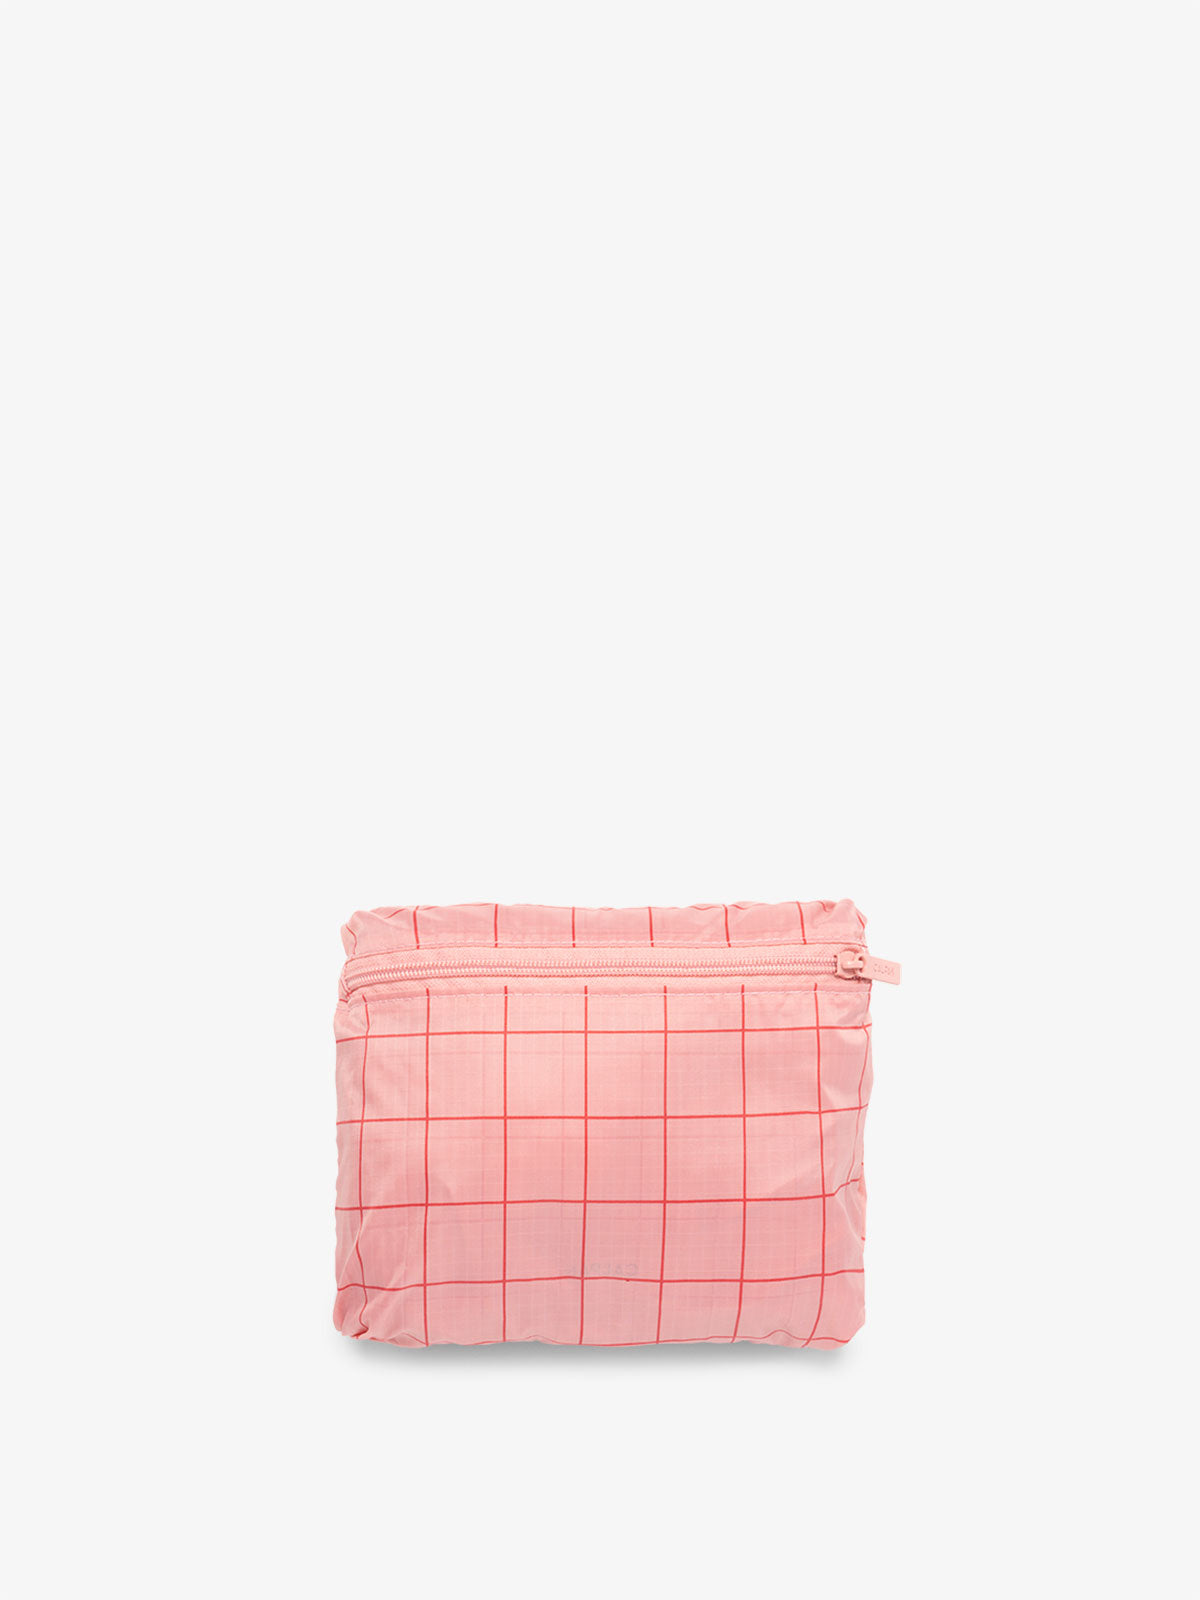 CALPAK Compakt foldable duffle bag for travel in pink grid